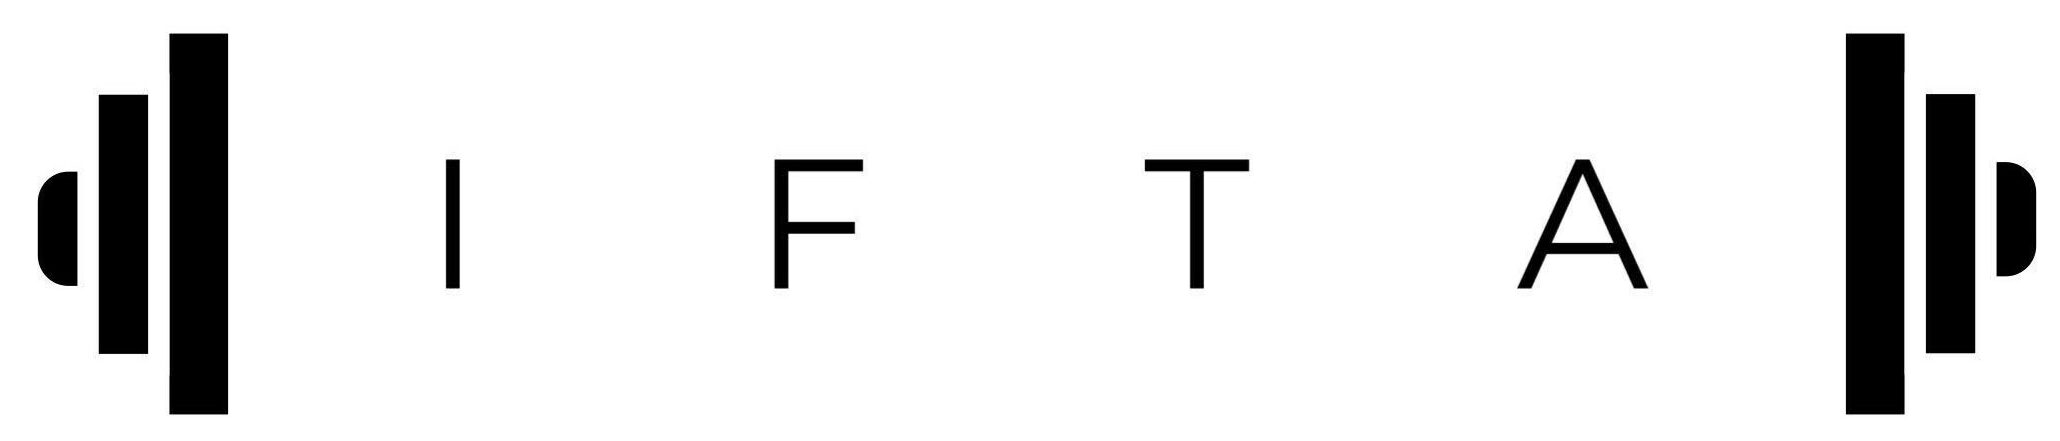 IFTA Logo Black